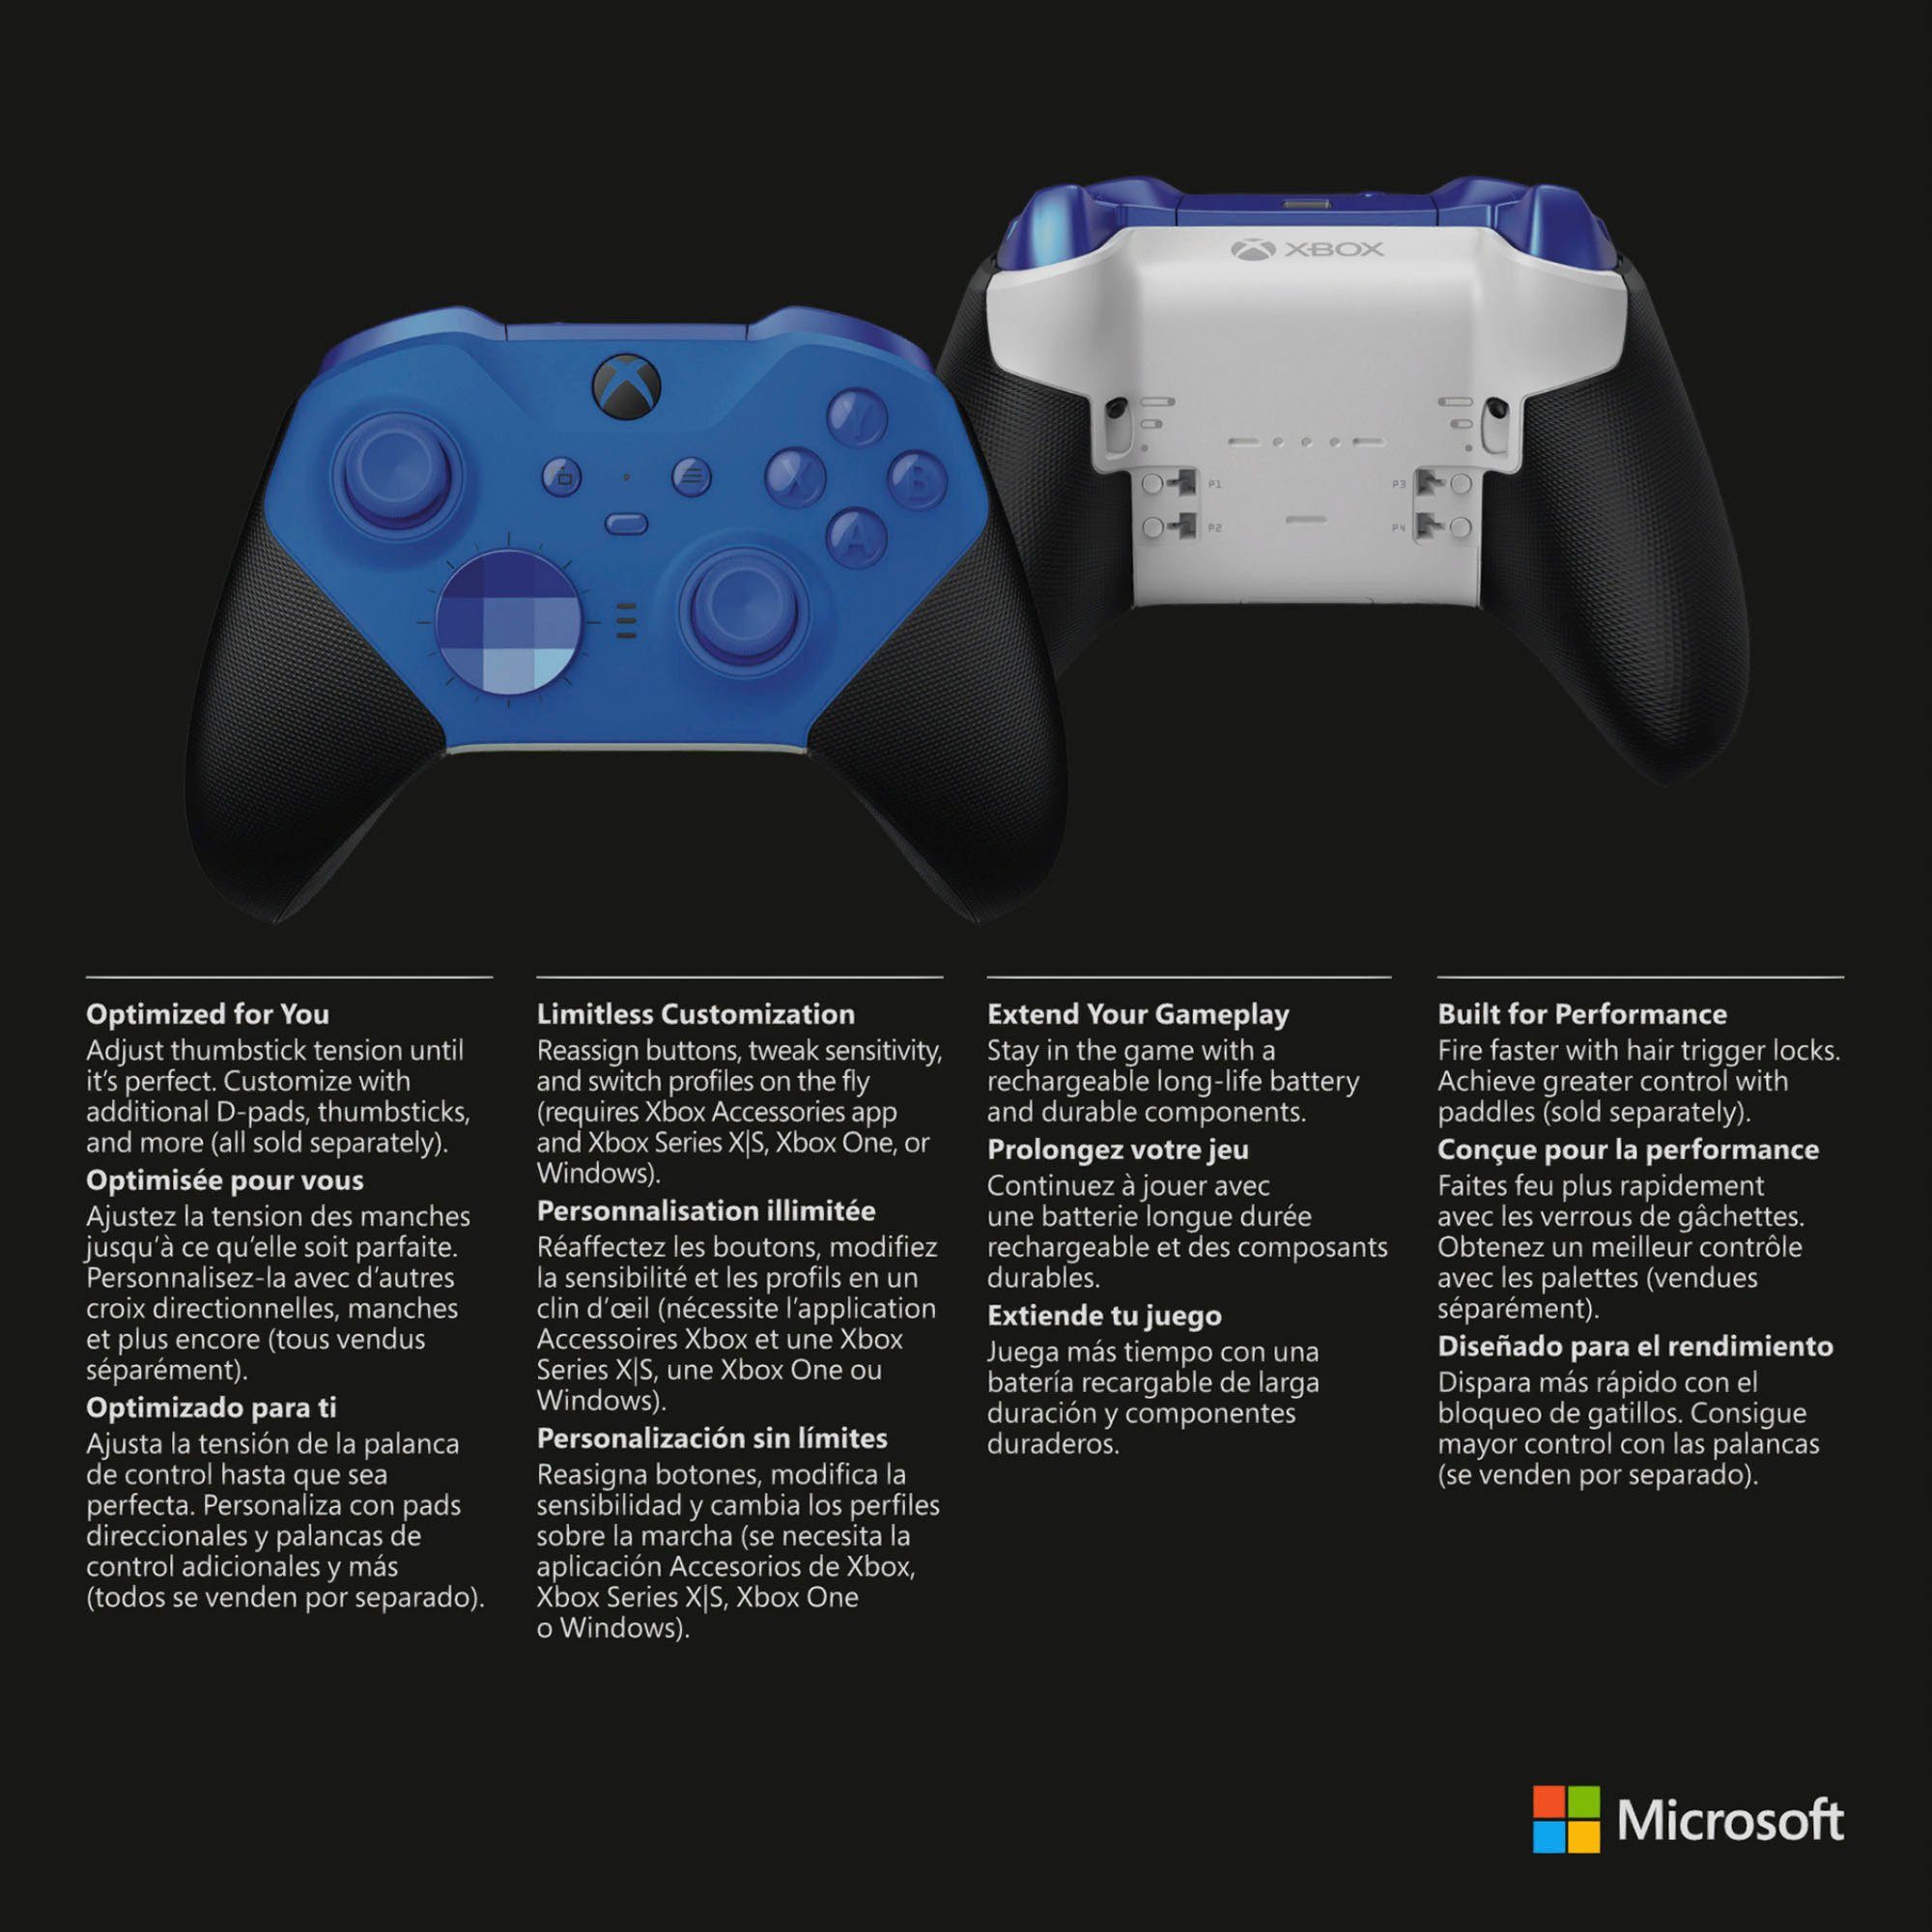 – Xbox Edition Series 2 Core Wireless-Controller Elite